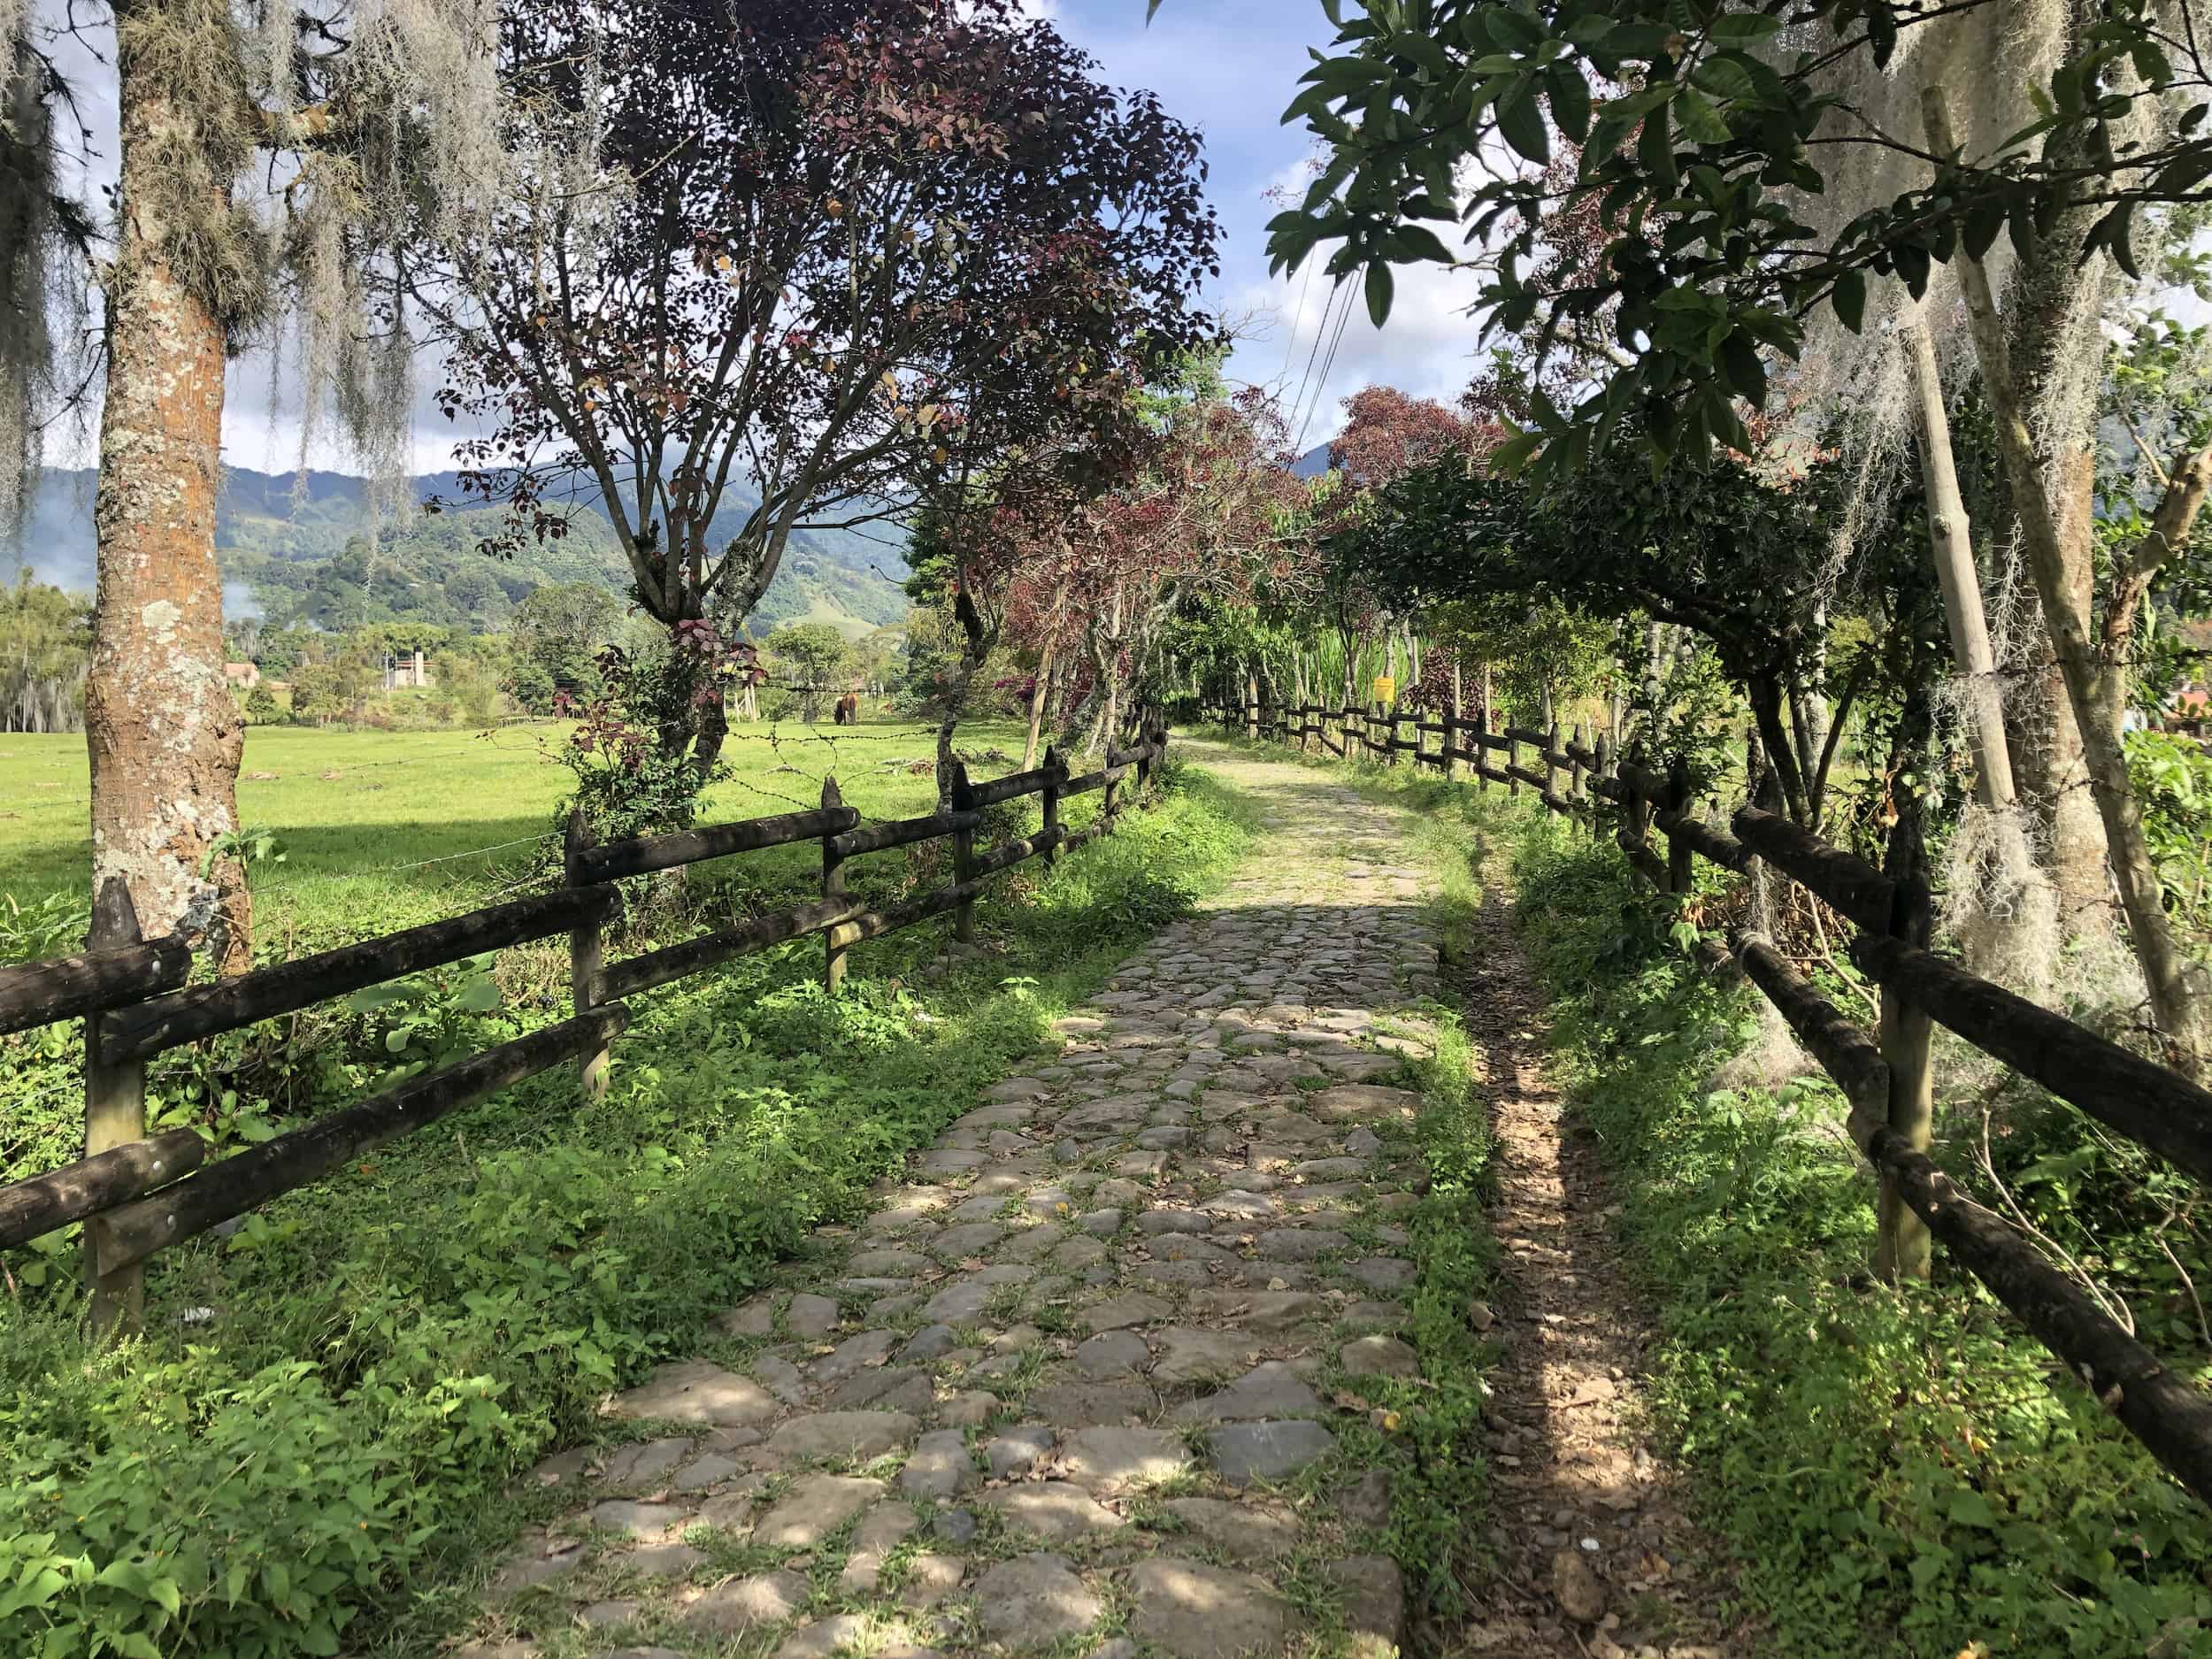 Lady Blacksmith's Path in Jardín, Antioquia, Colombia